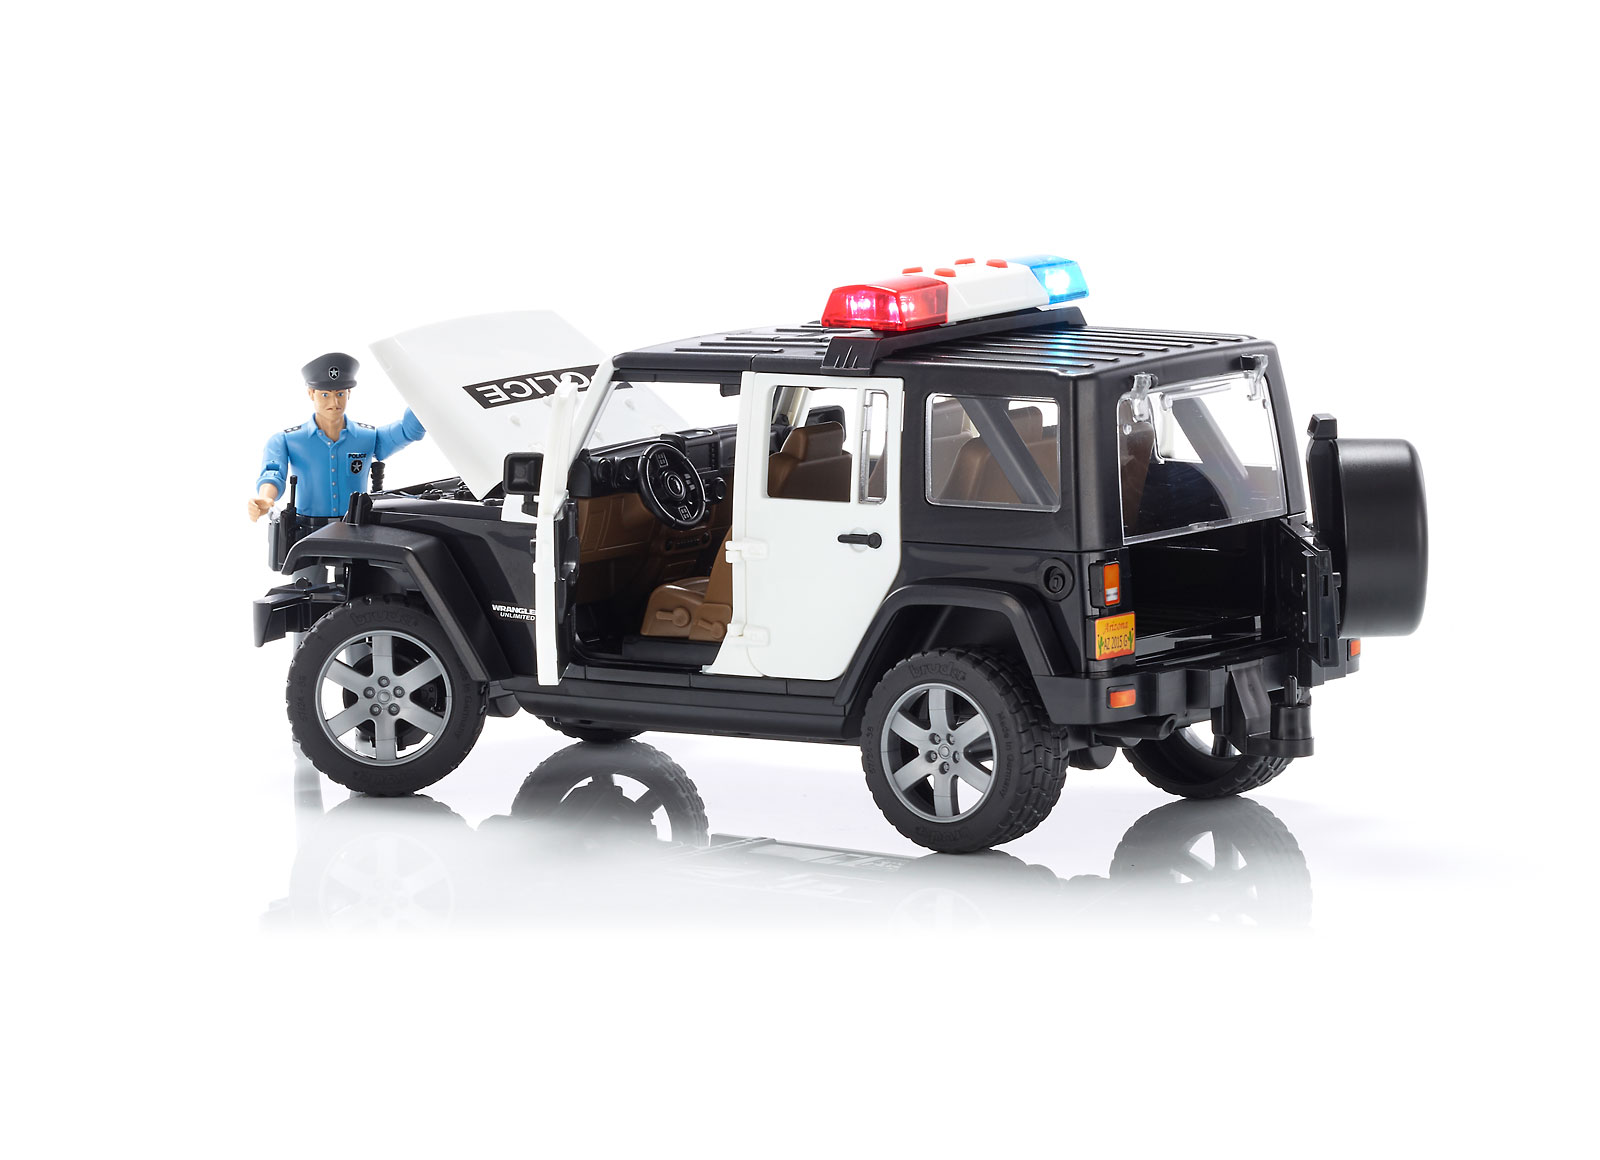 Jeep de police Wrangler Unlimited avec policier jouet Bruder 02526